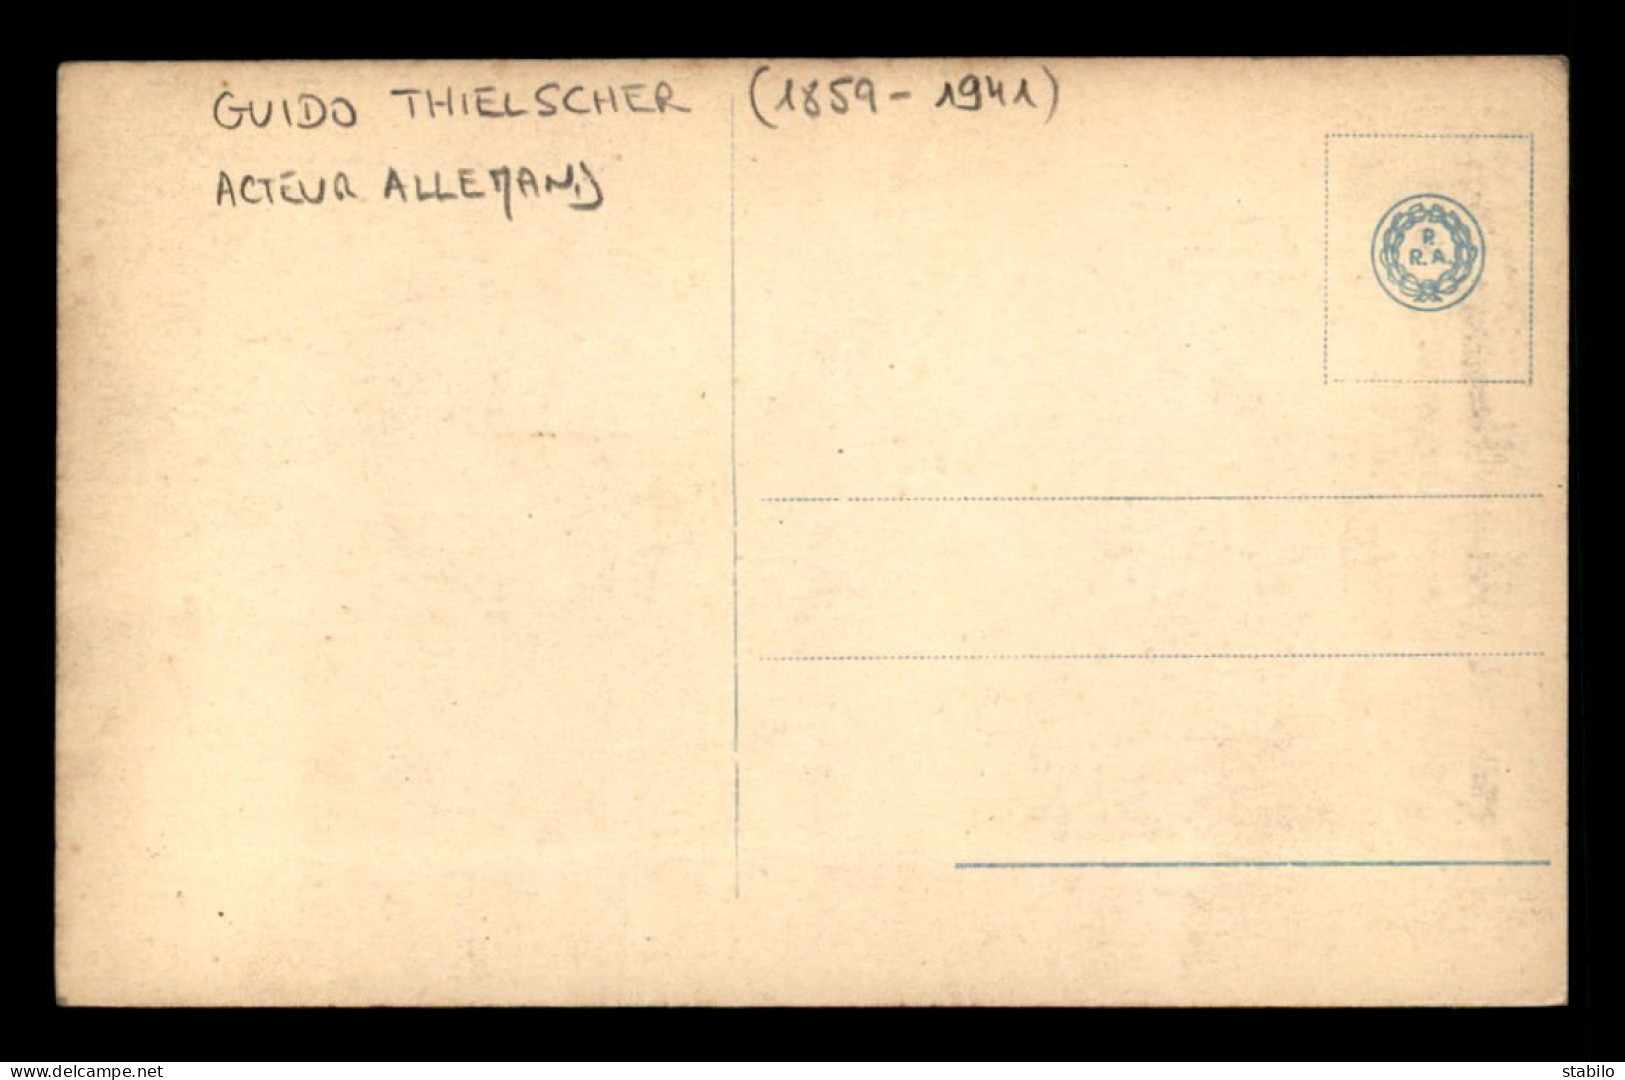 ARTISTES - GUIDO THIELSCHER (1859-1941) - ACTEUR ALLEMAND - Entertainers